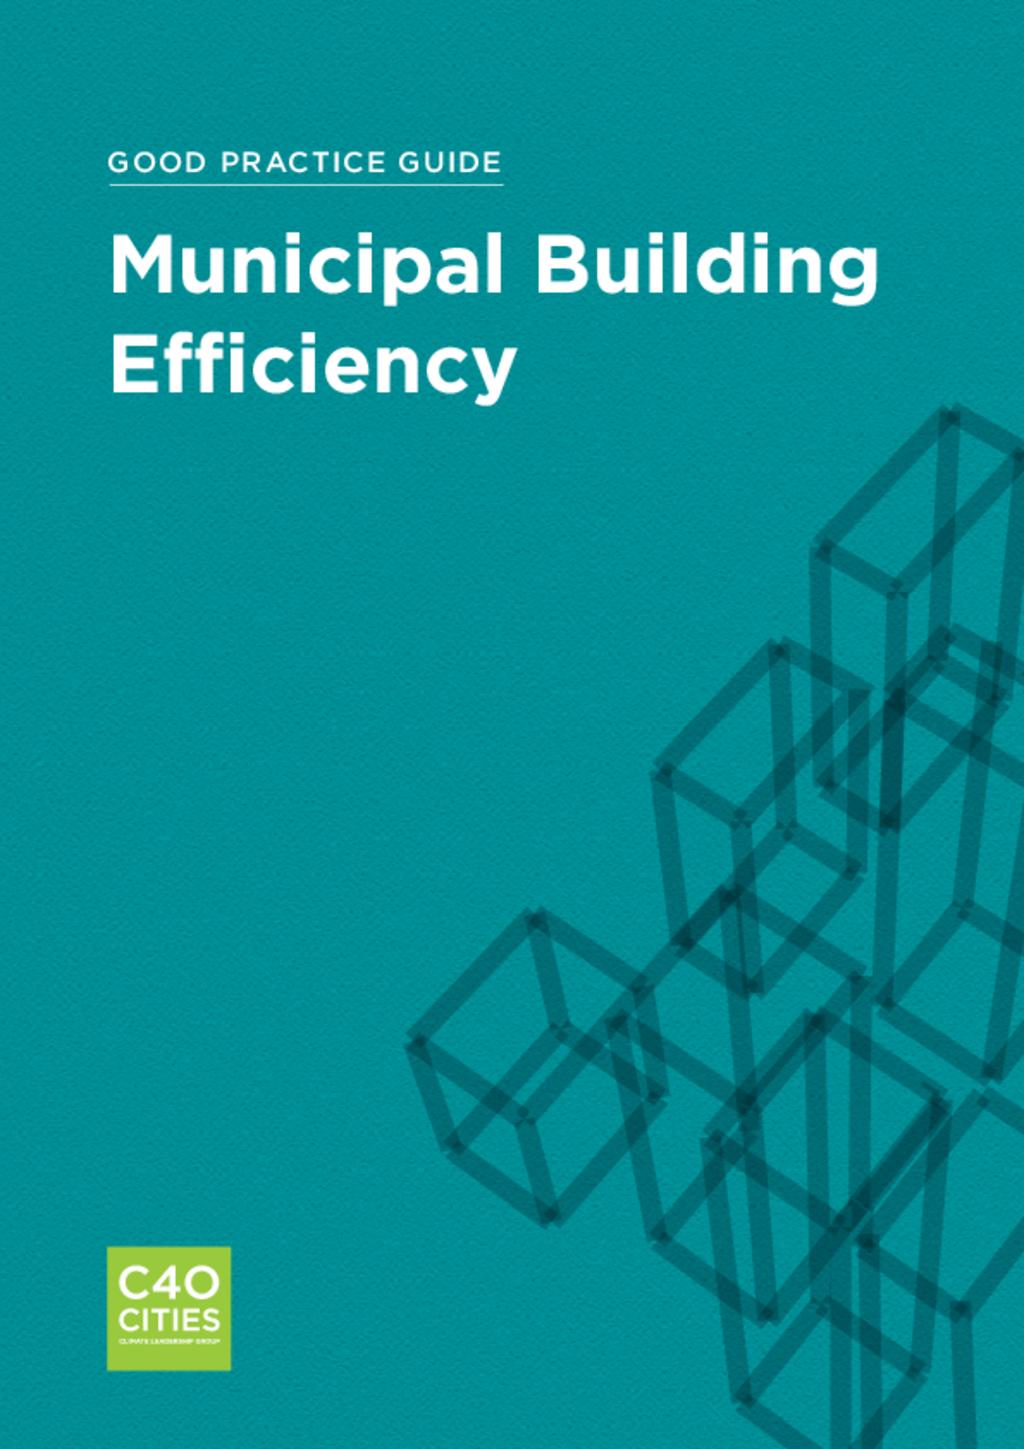 Good Practice Guide - Municipal Building Efficiency